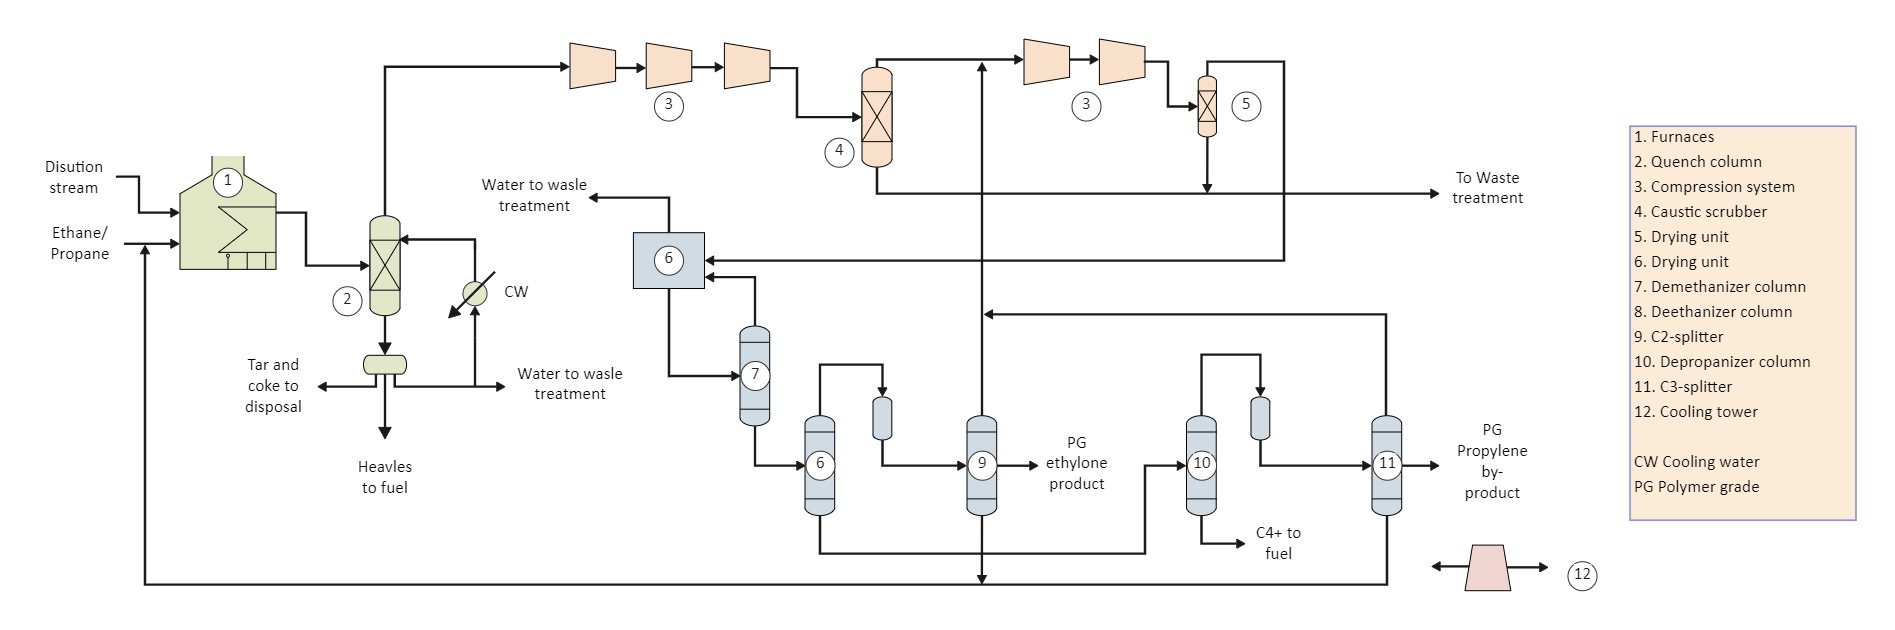 Ethane Cracker Process flow diagram